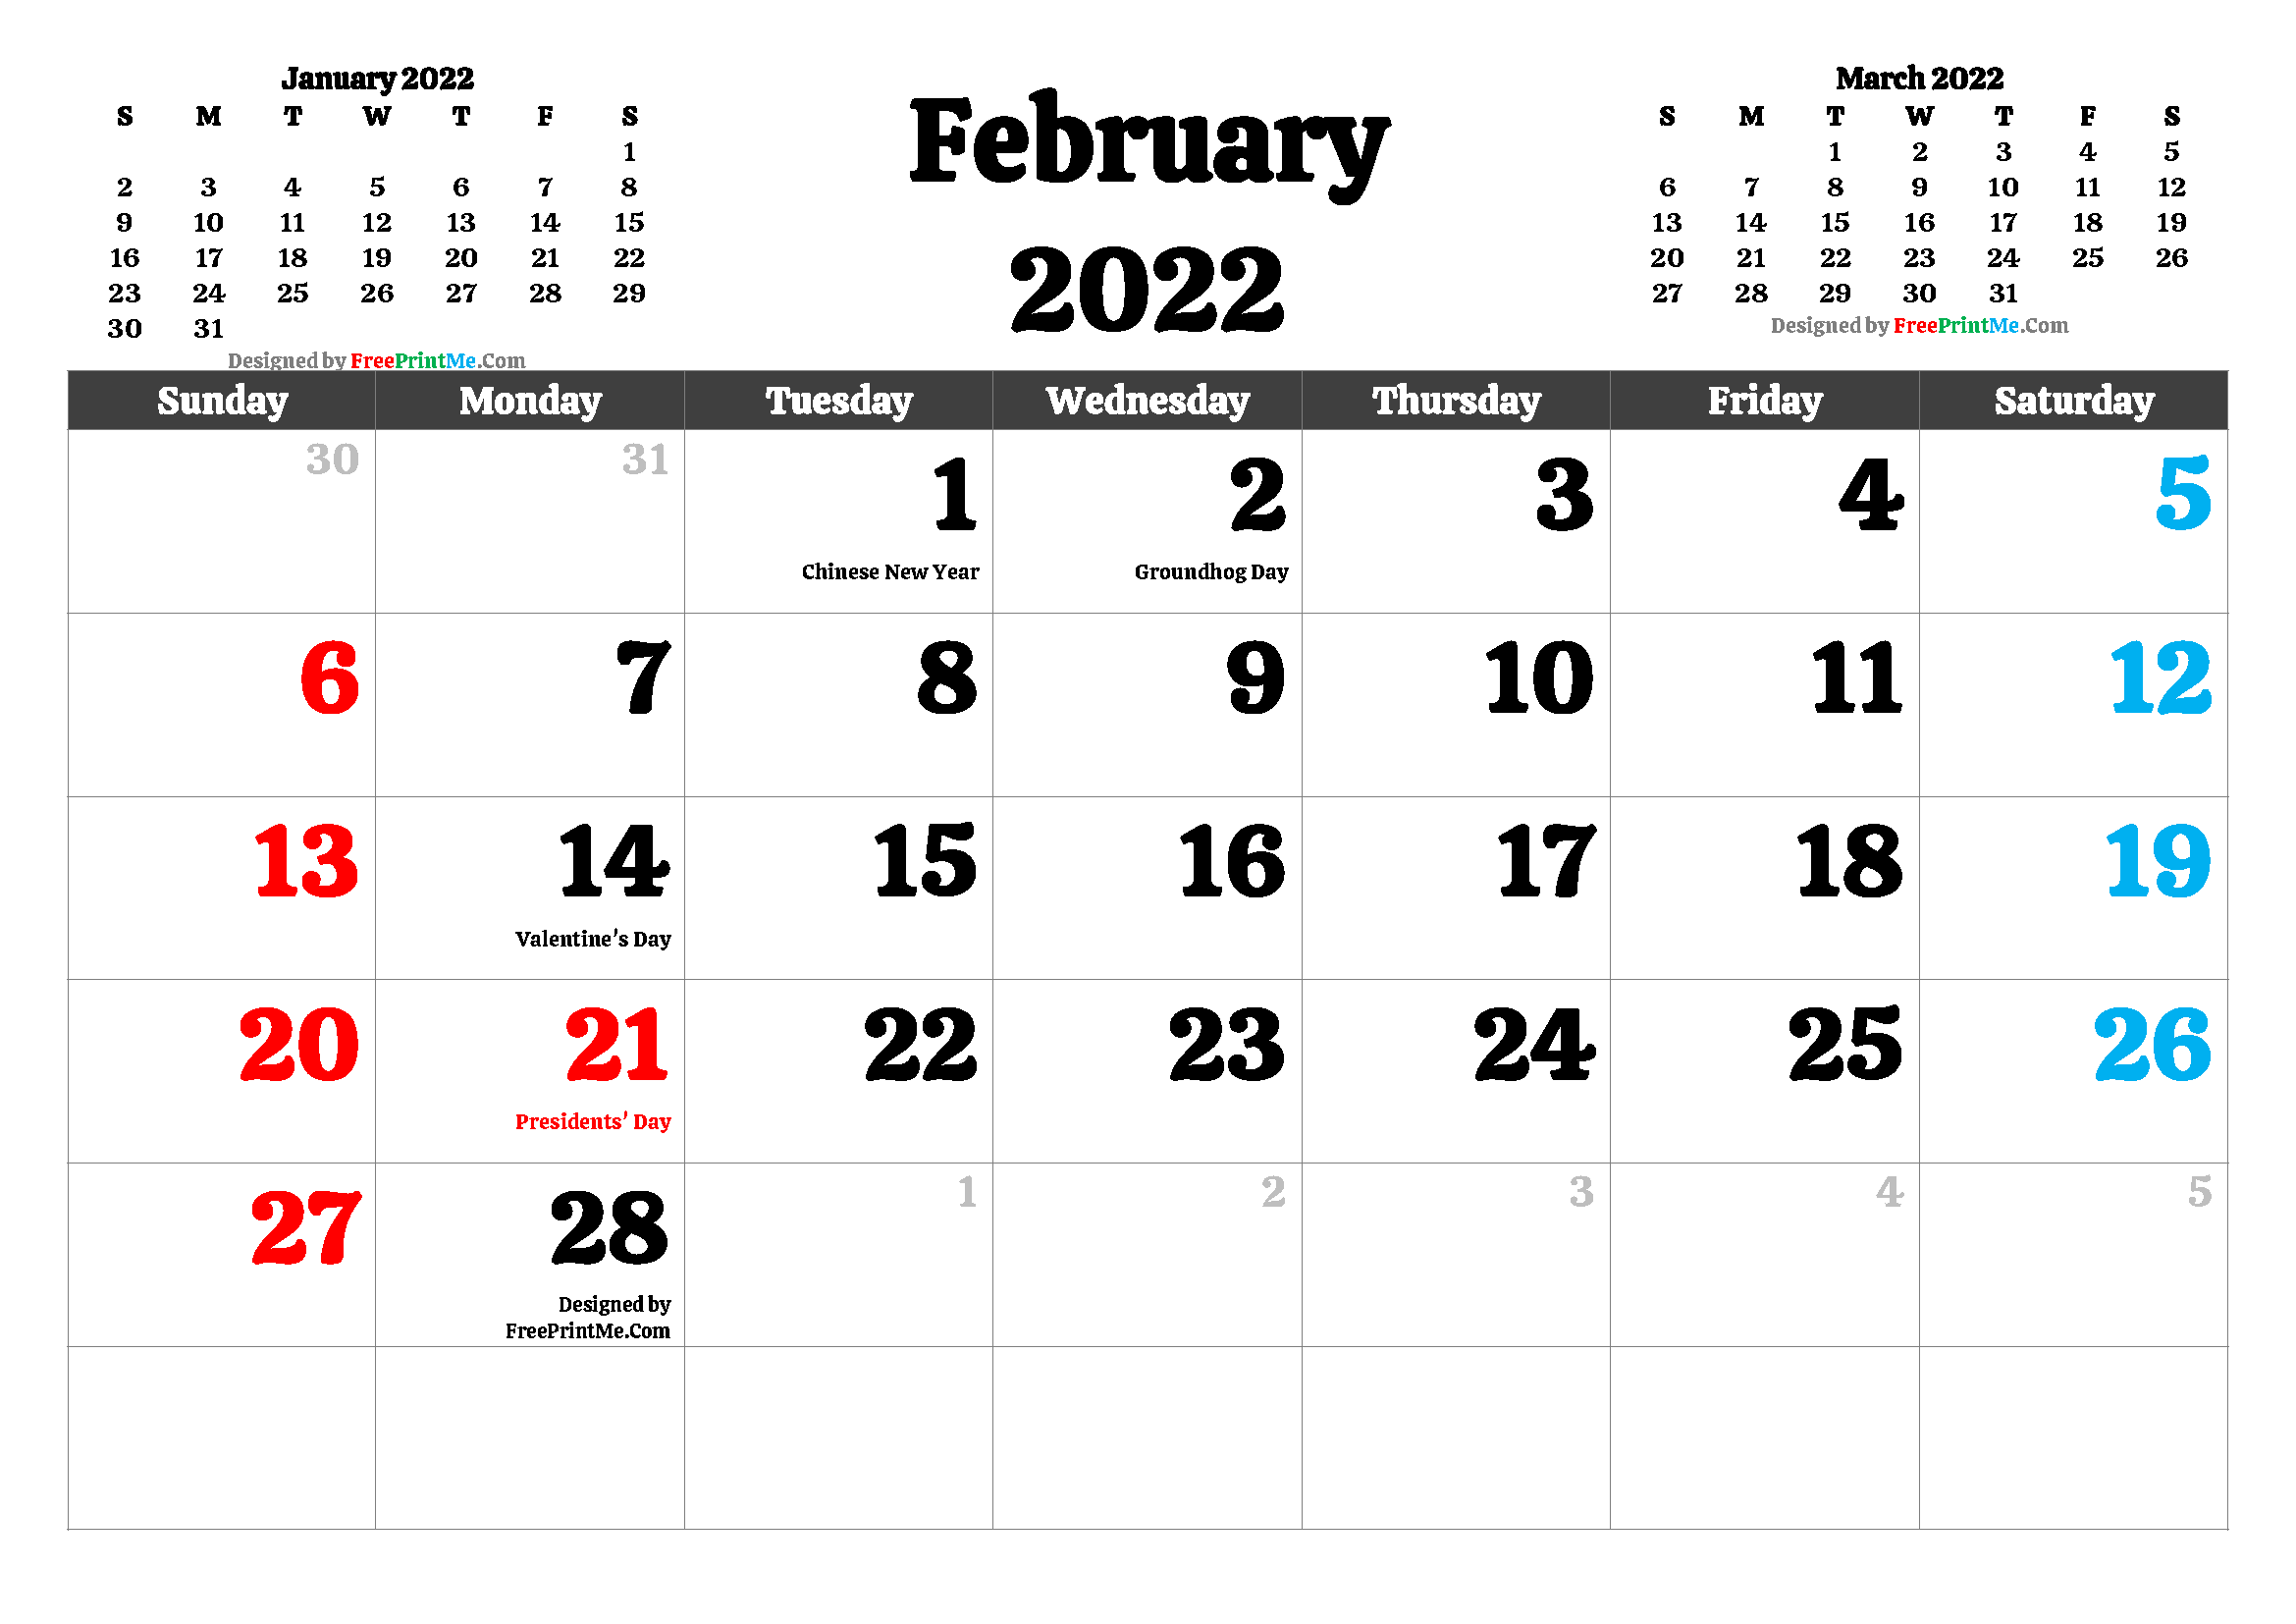 February 2022 Holiday Calendar Free Printable February 2022 Calendar Pdf And Image